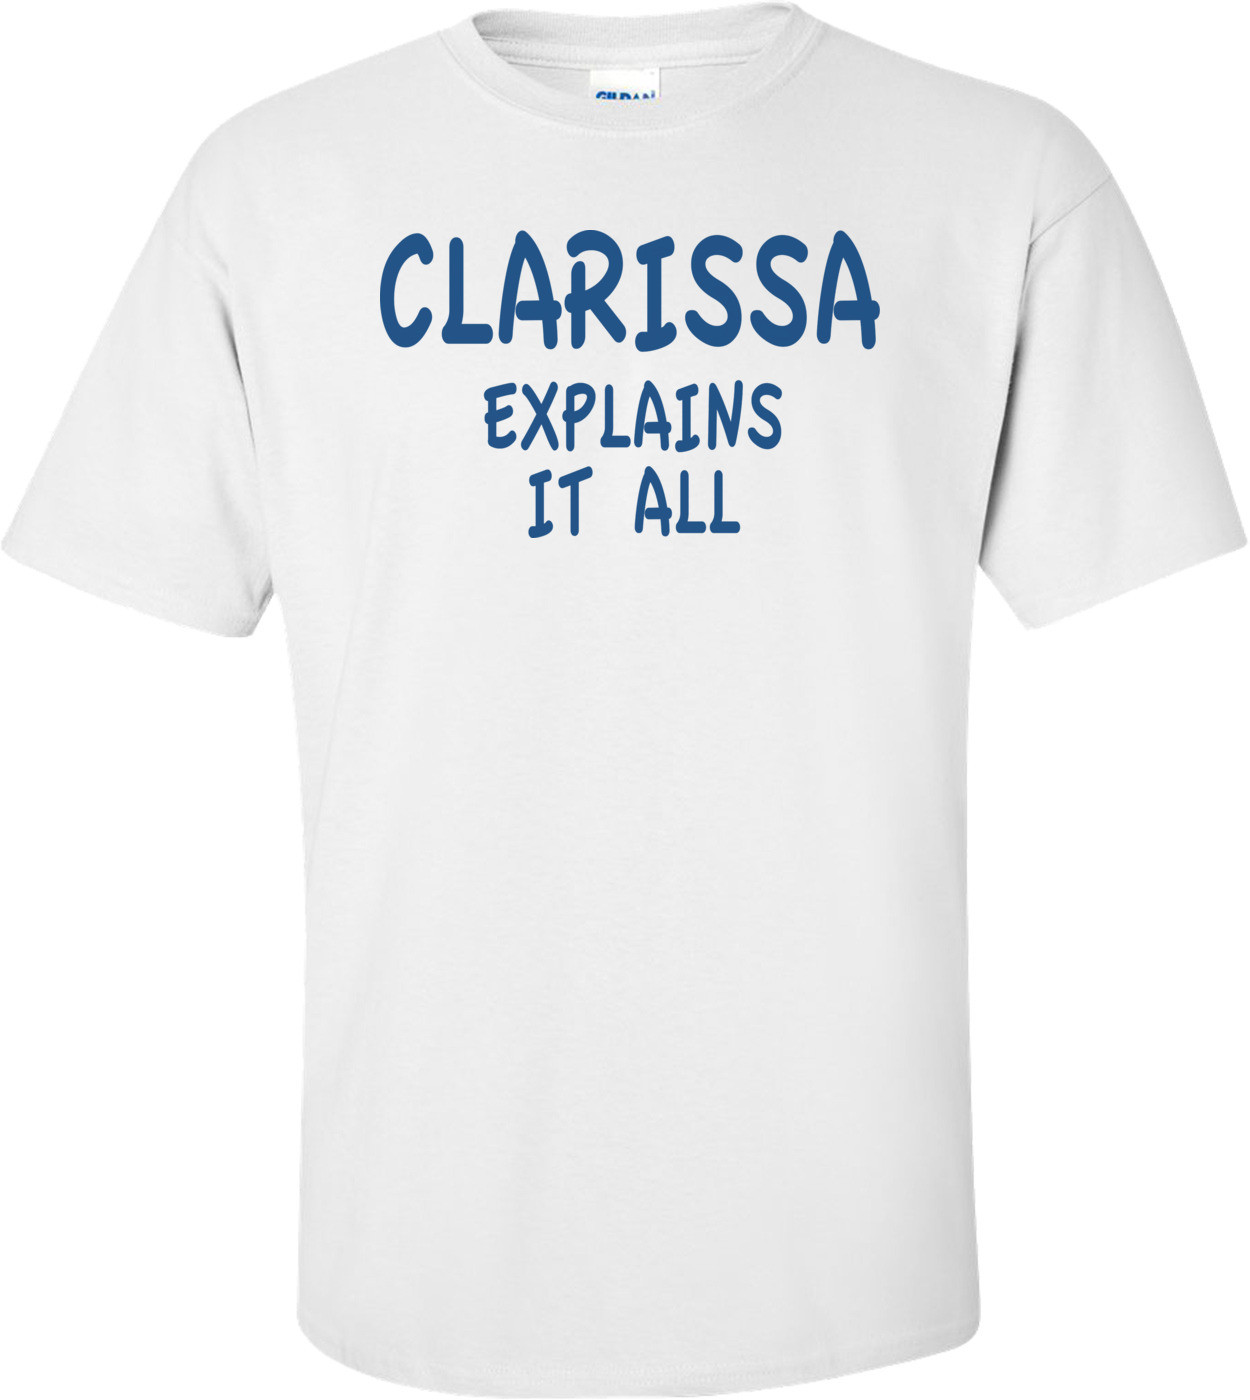 Clarissa Explains It All T-shirt